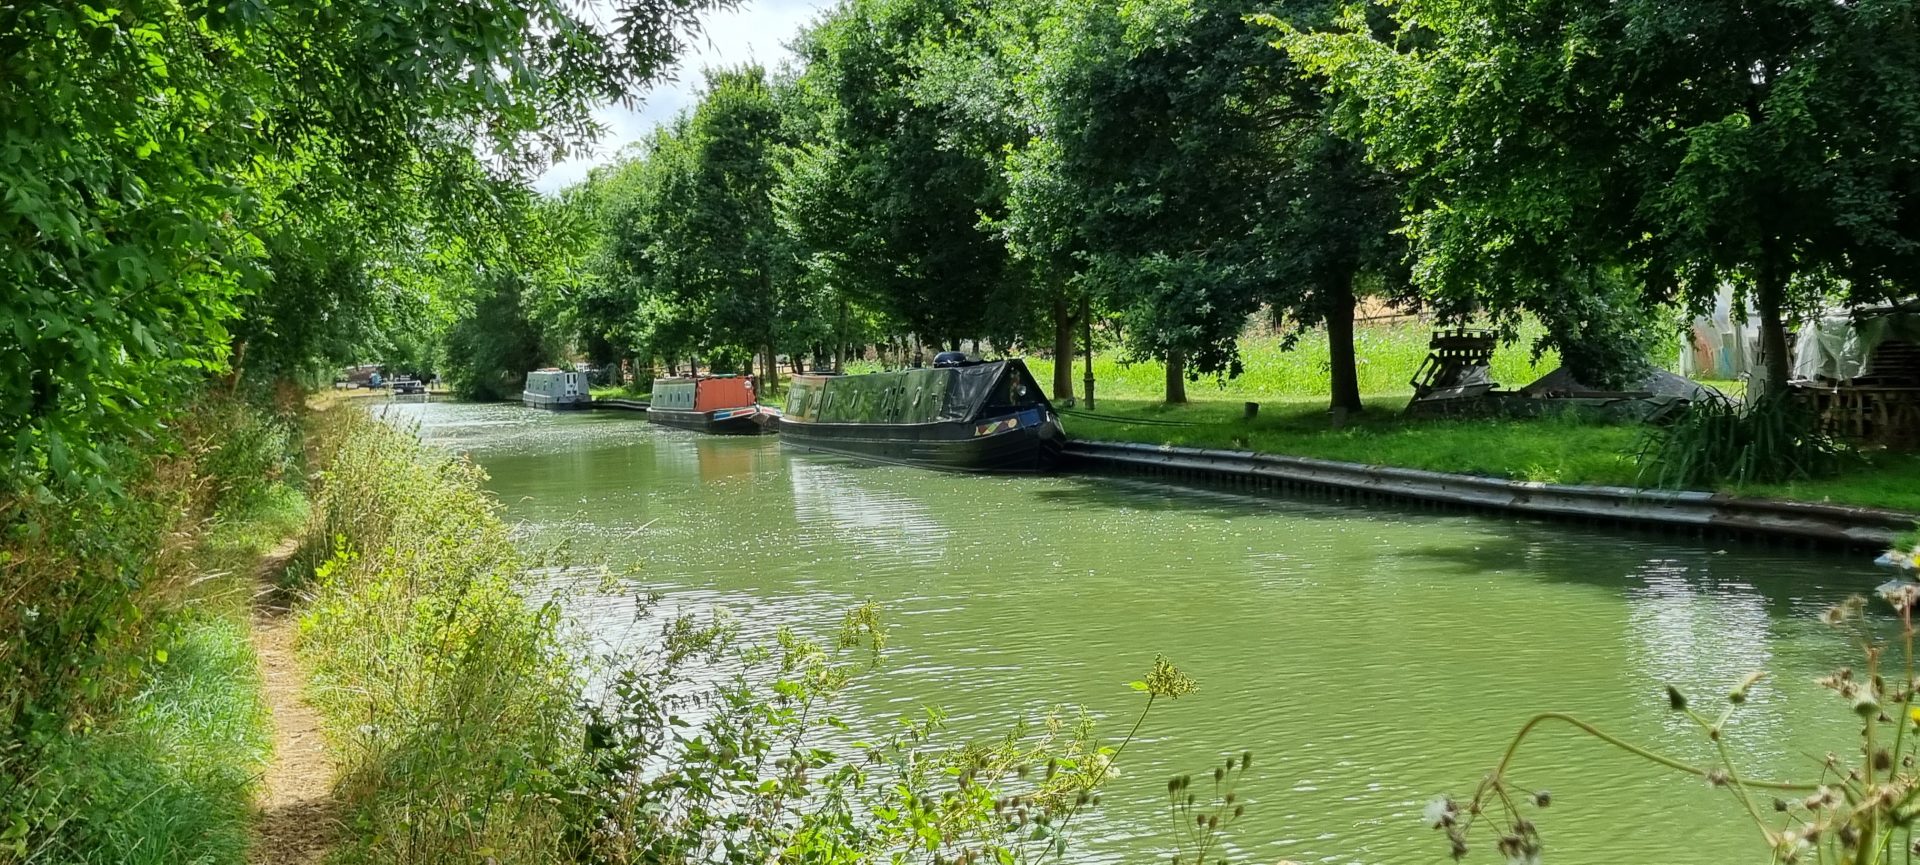 Forge farm moorings - Oxford canal